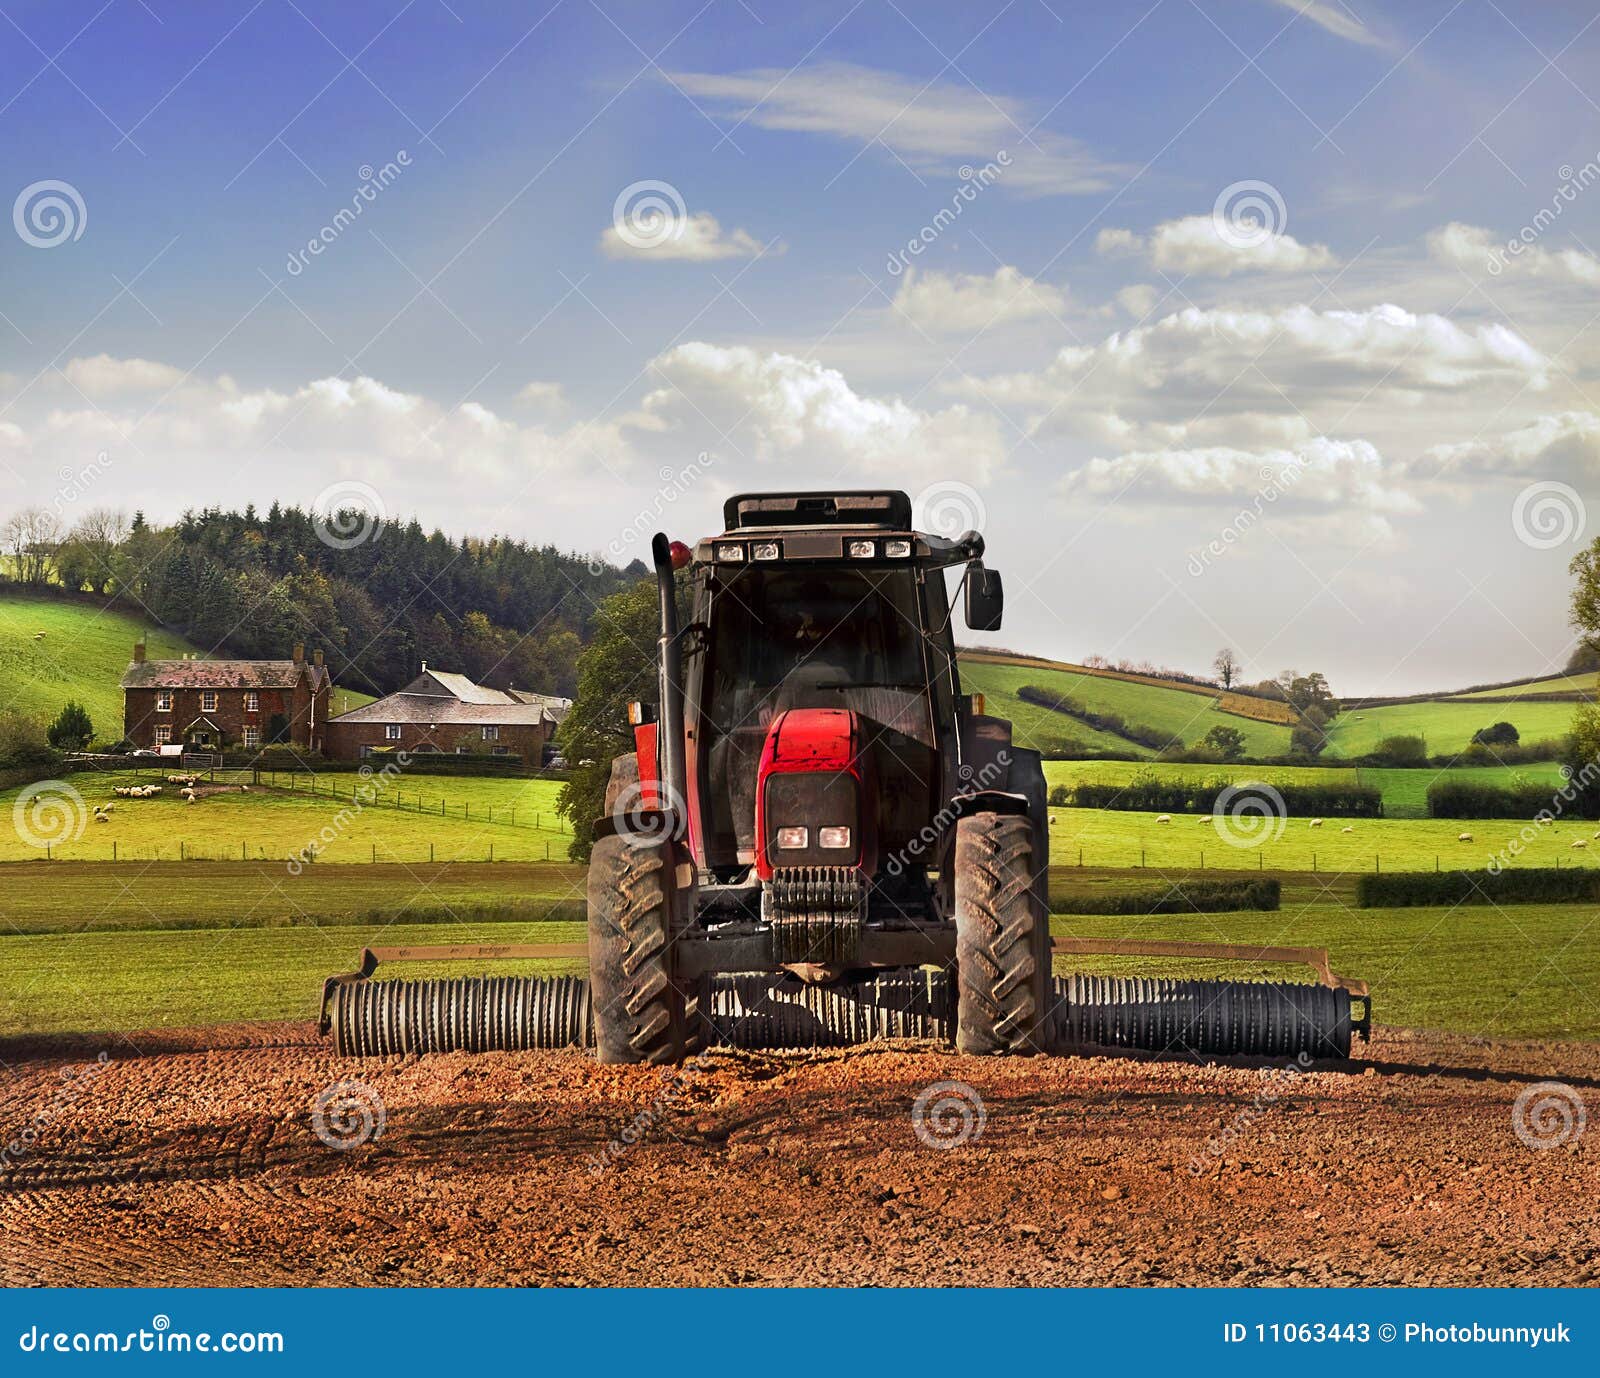 tractor on farmland, somerset.